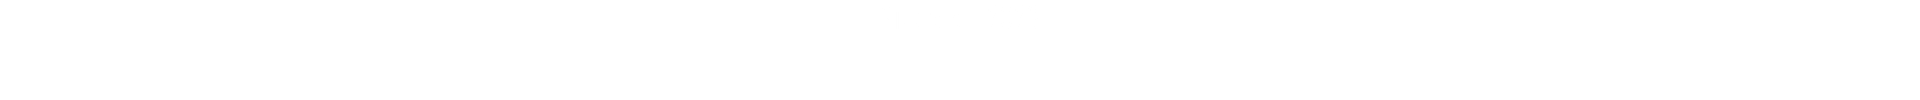 Sicktale - 2023